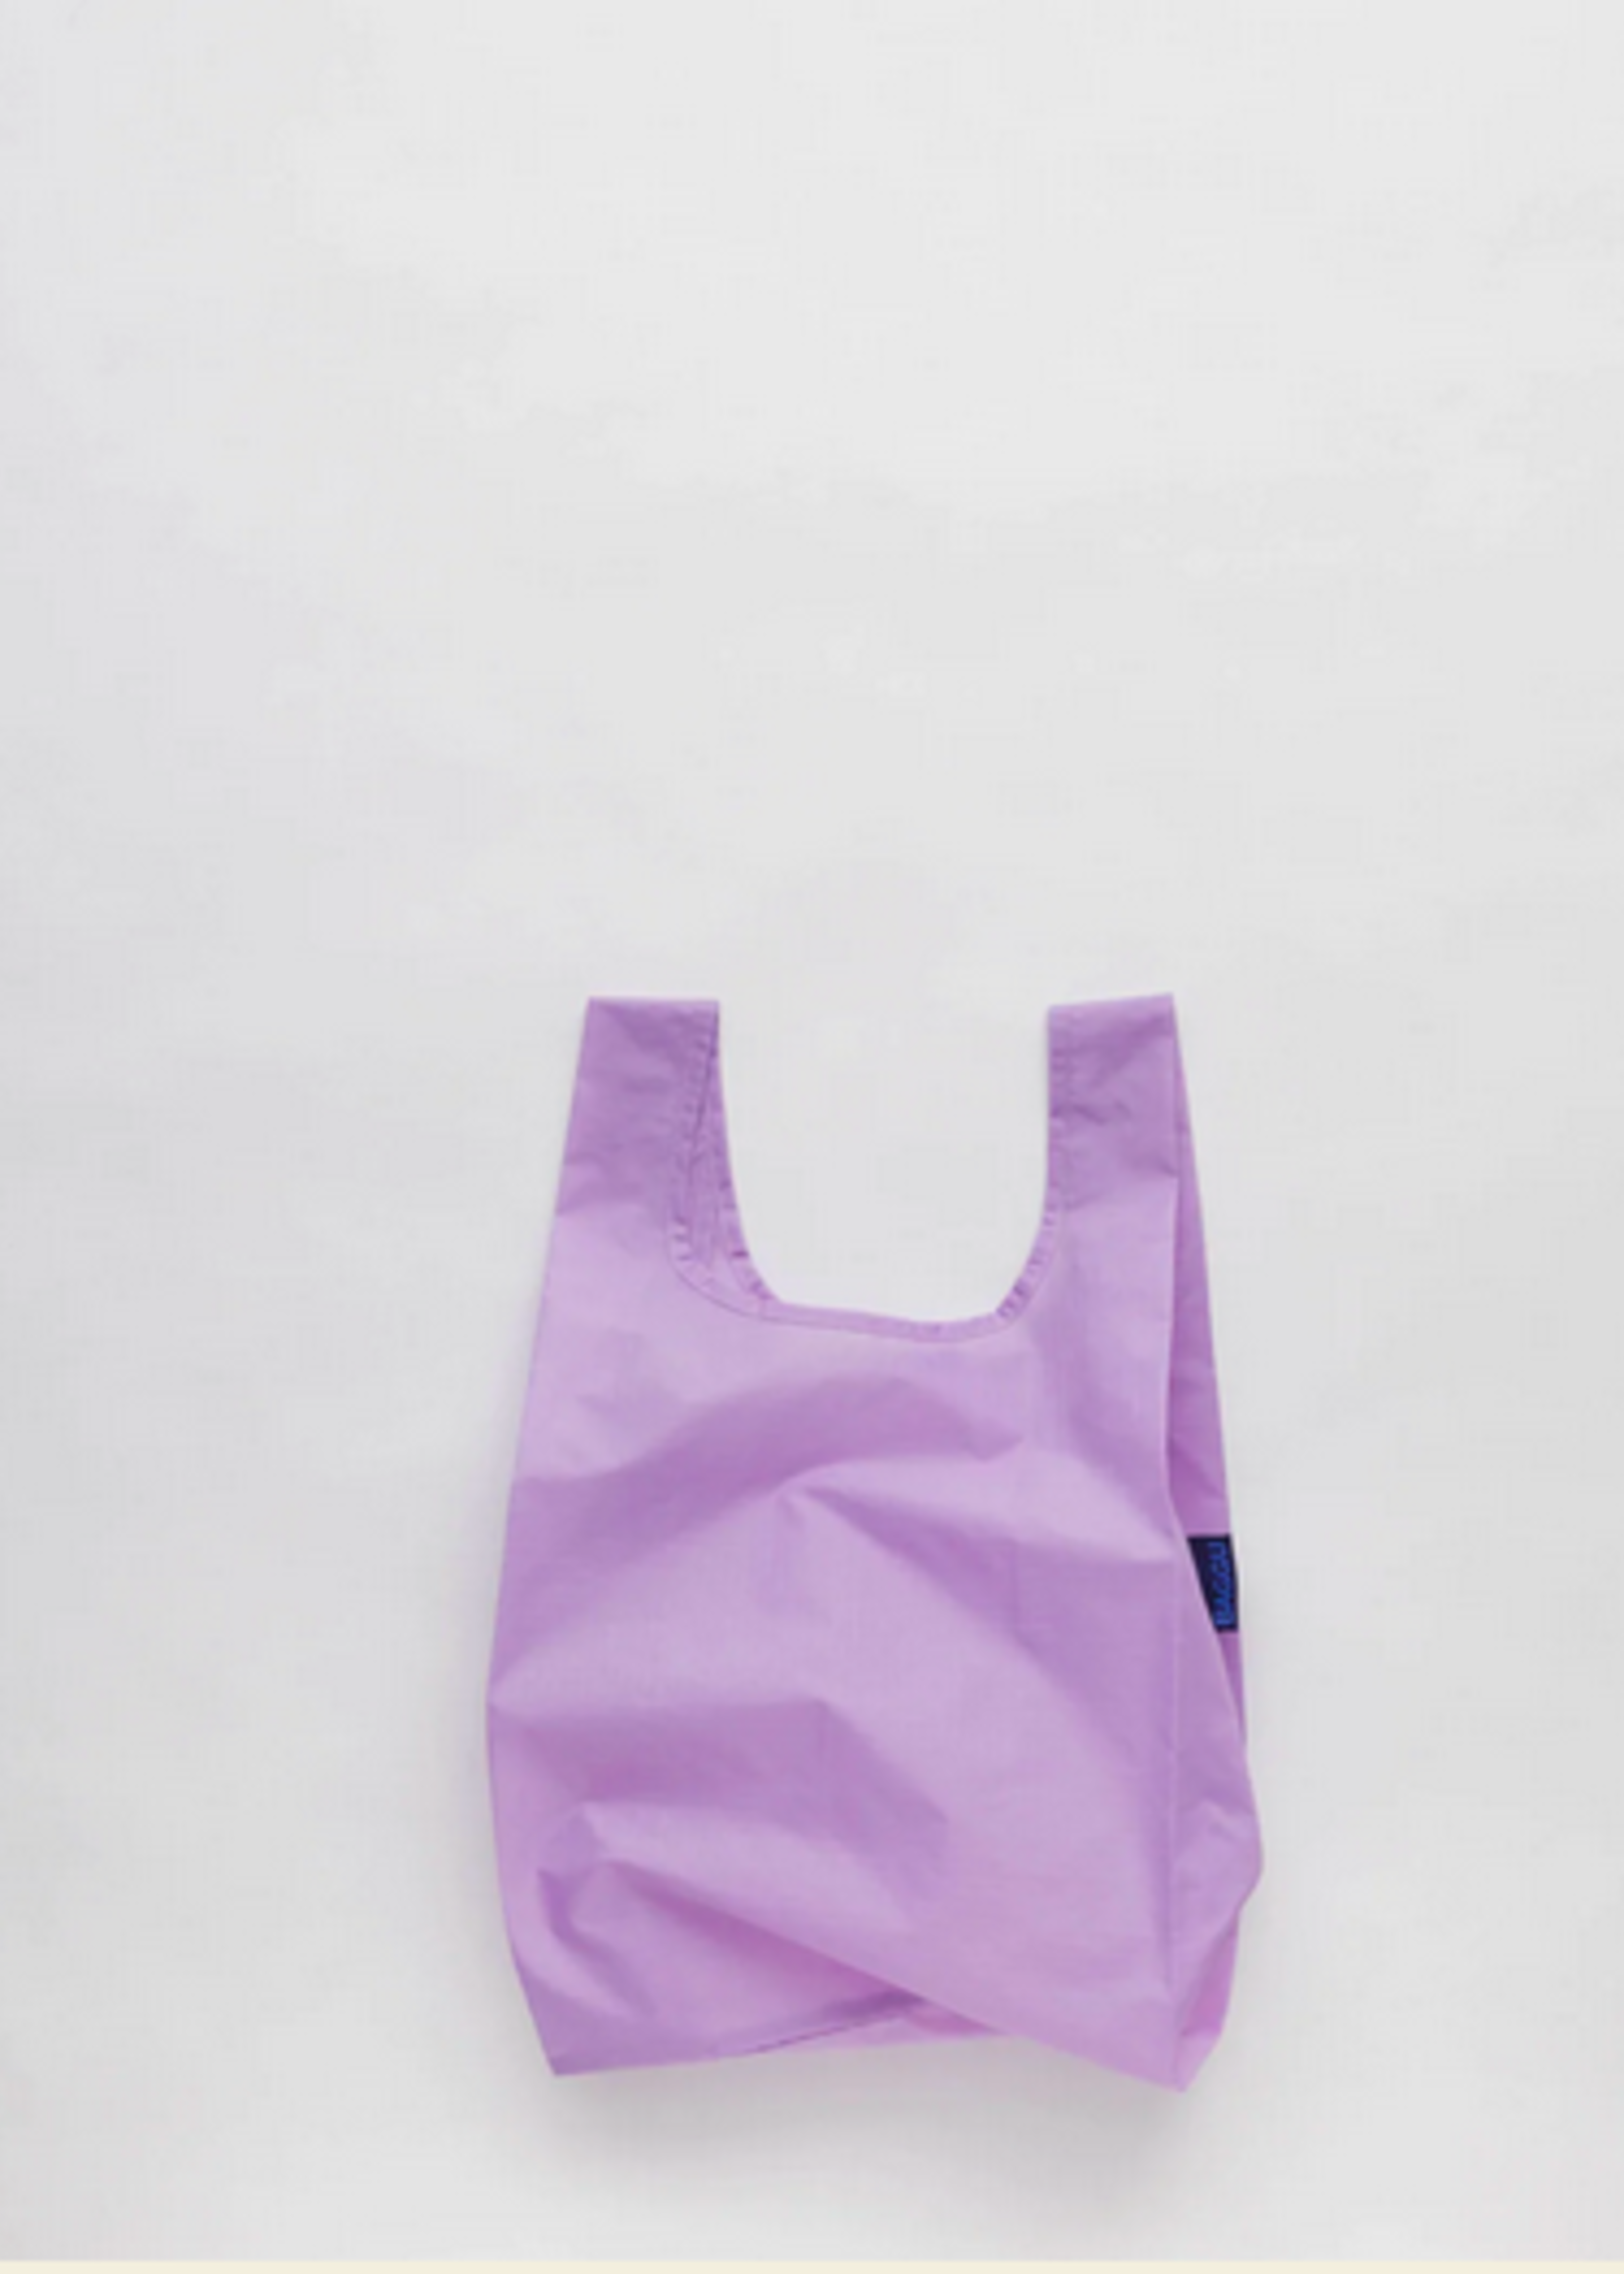 Baggu Baby Reusable bag dusty lilac